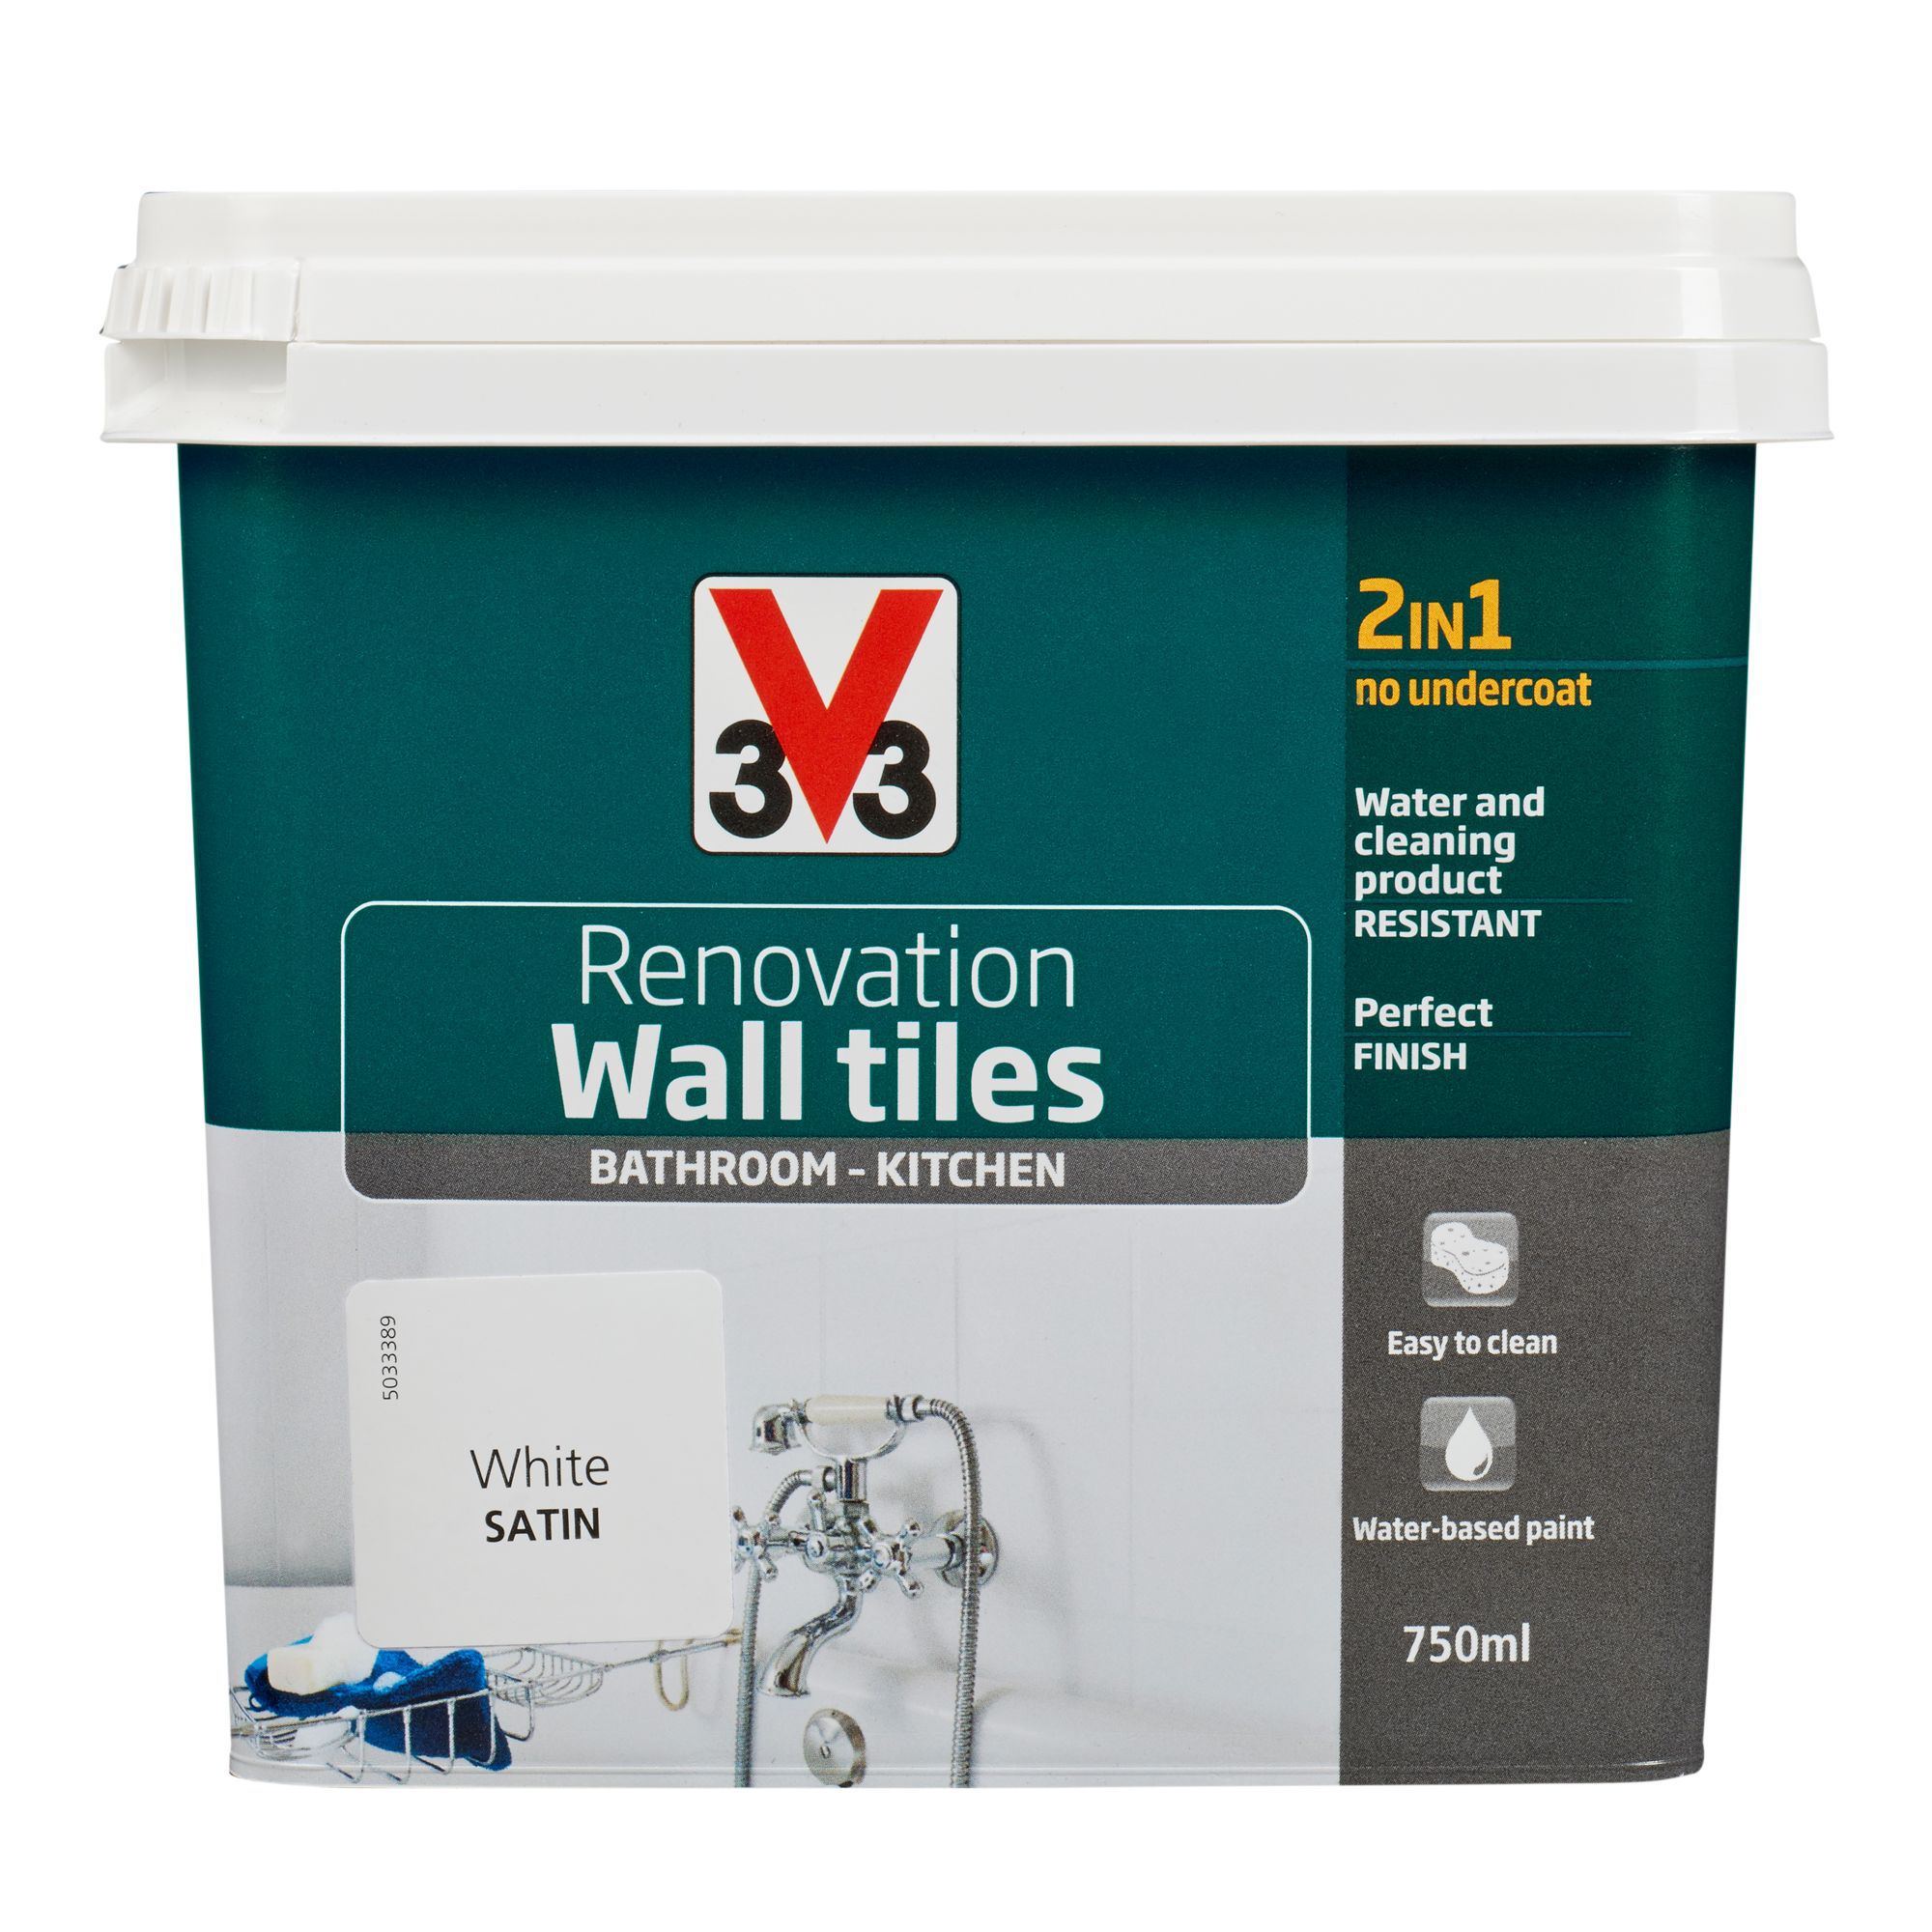 V33 Renovation White Satin Wall tile paint 0.75L | DIY at B&Q